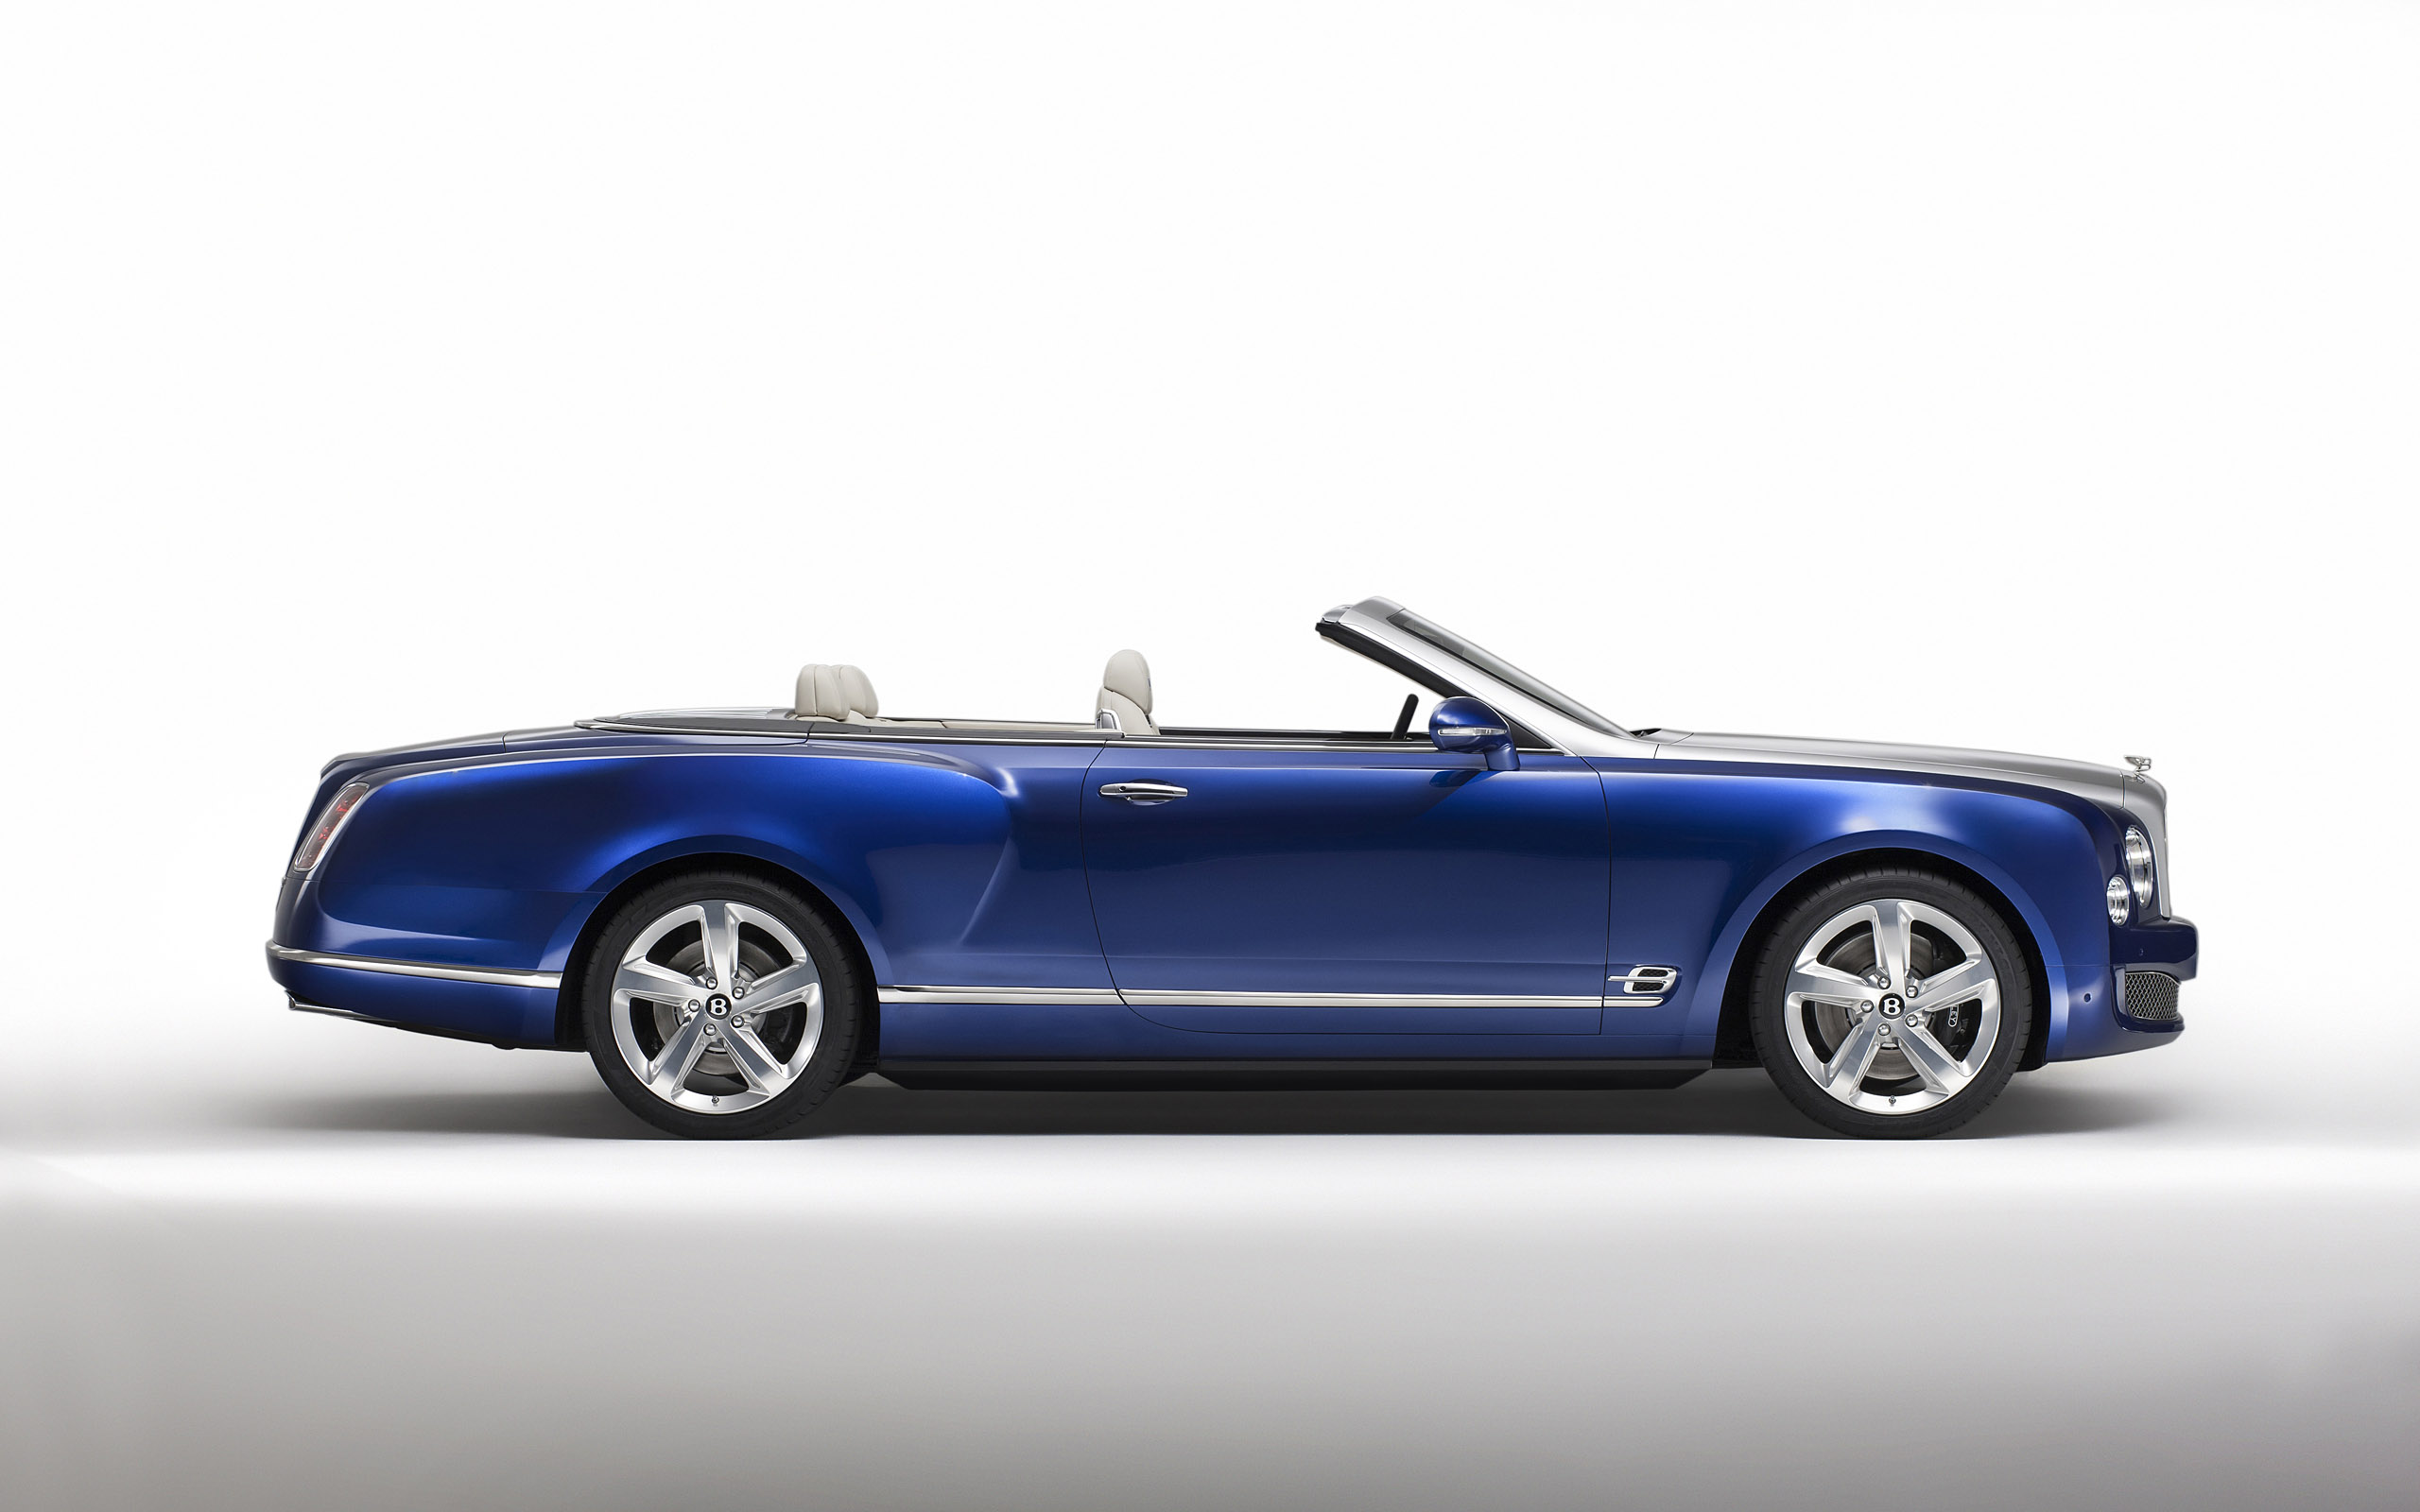  2014 Bentley Grand Convertible Concept Wallpaper.